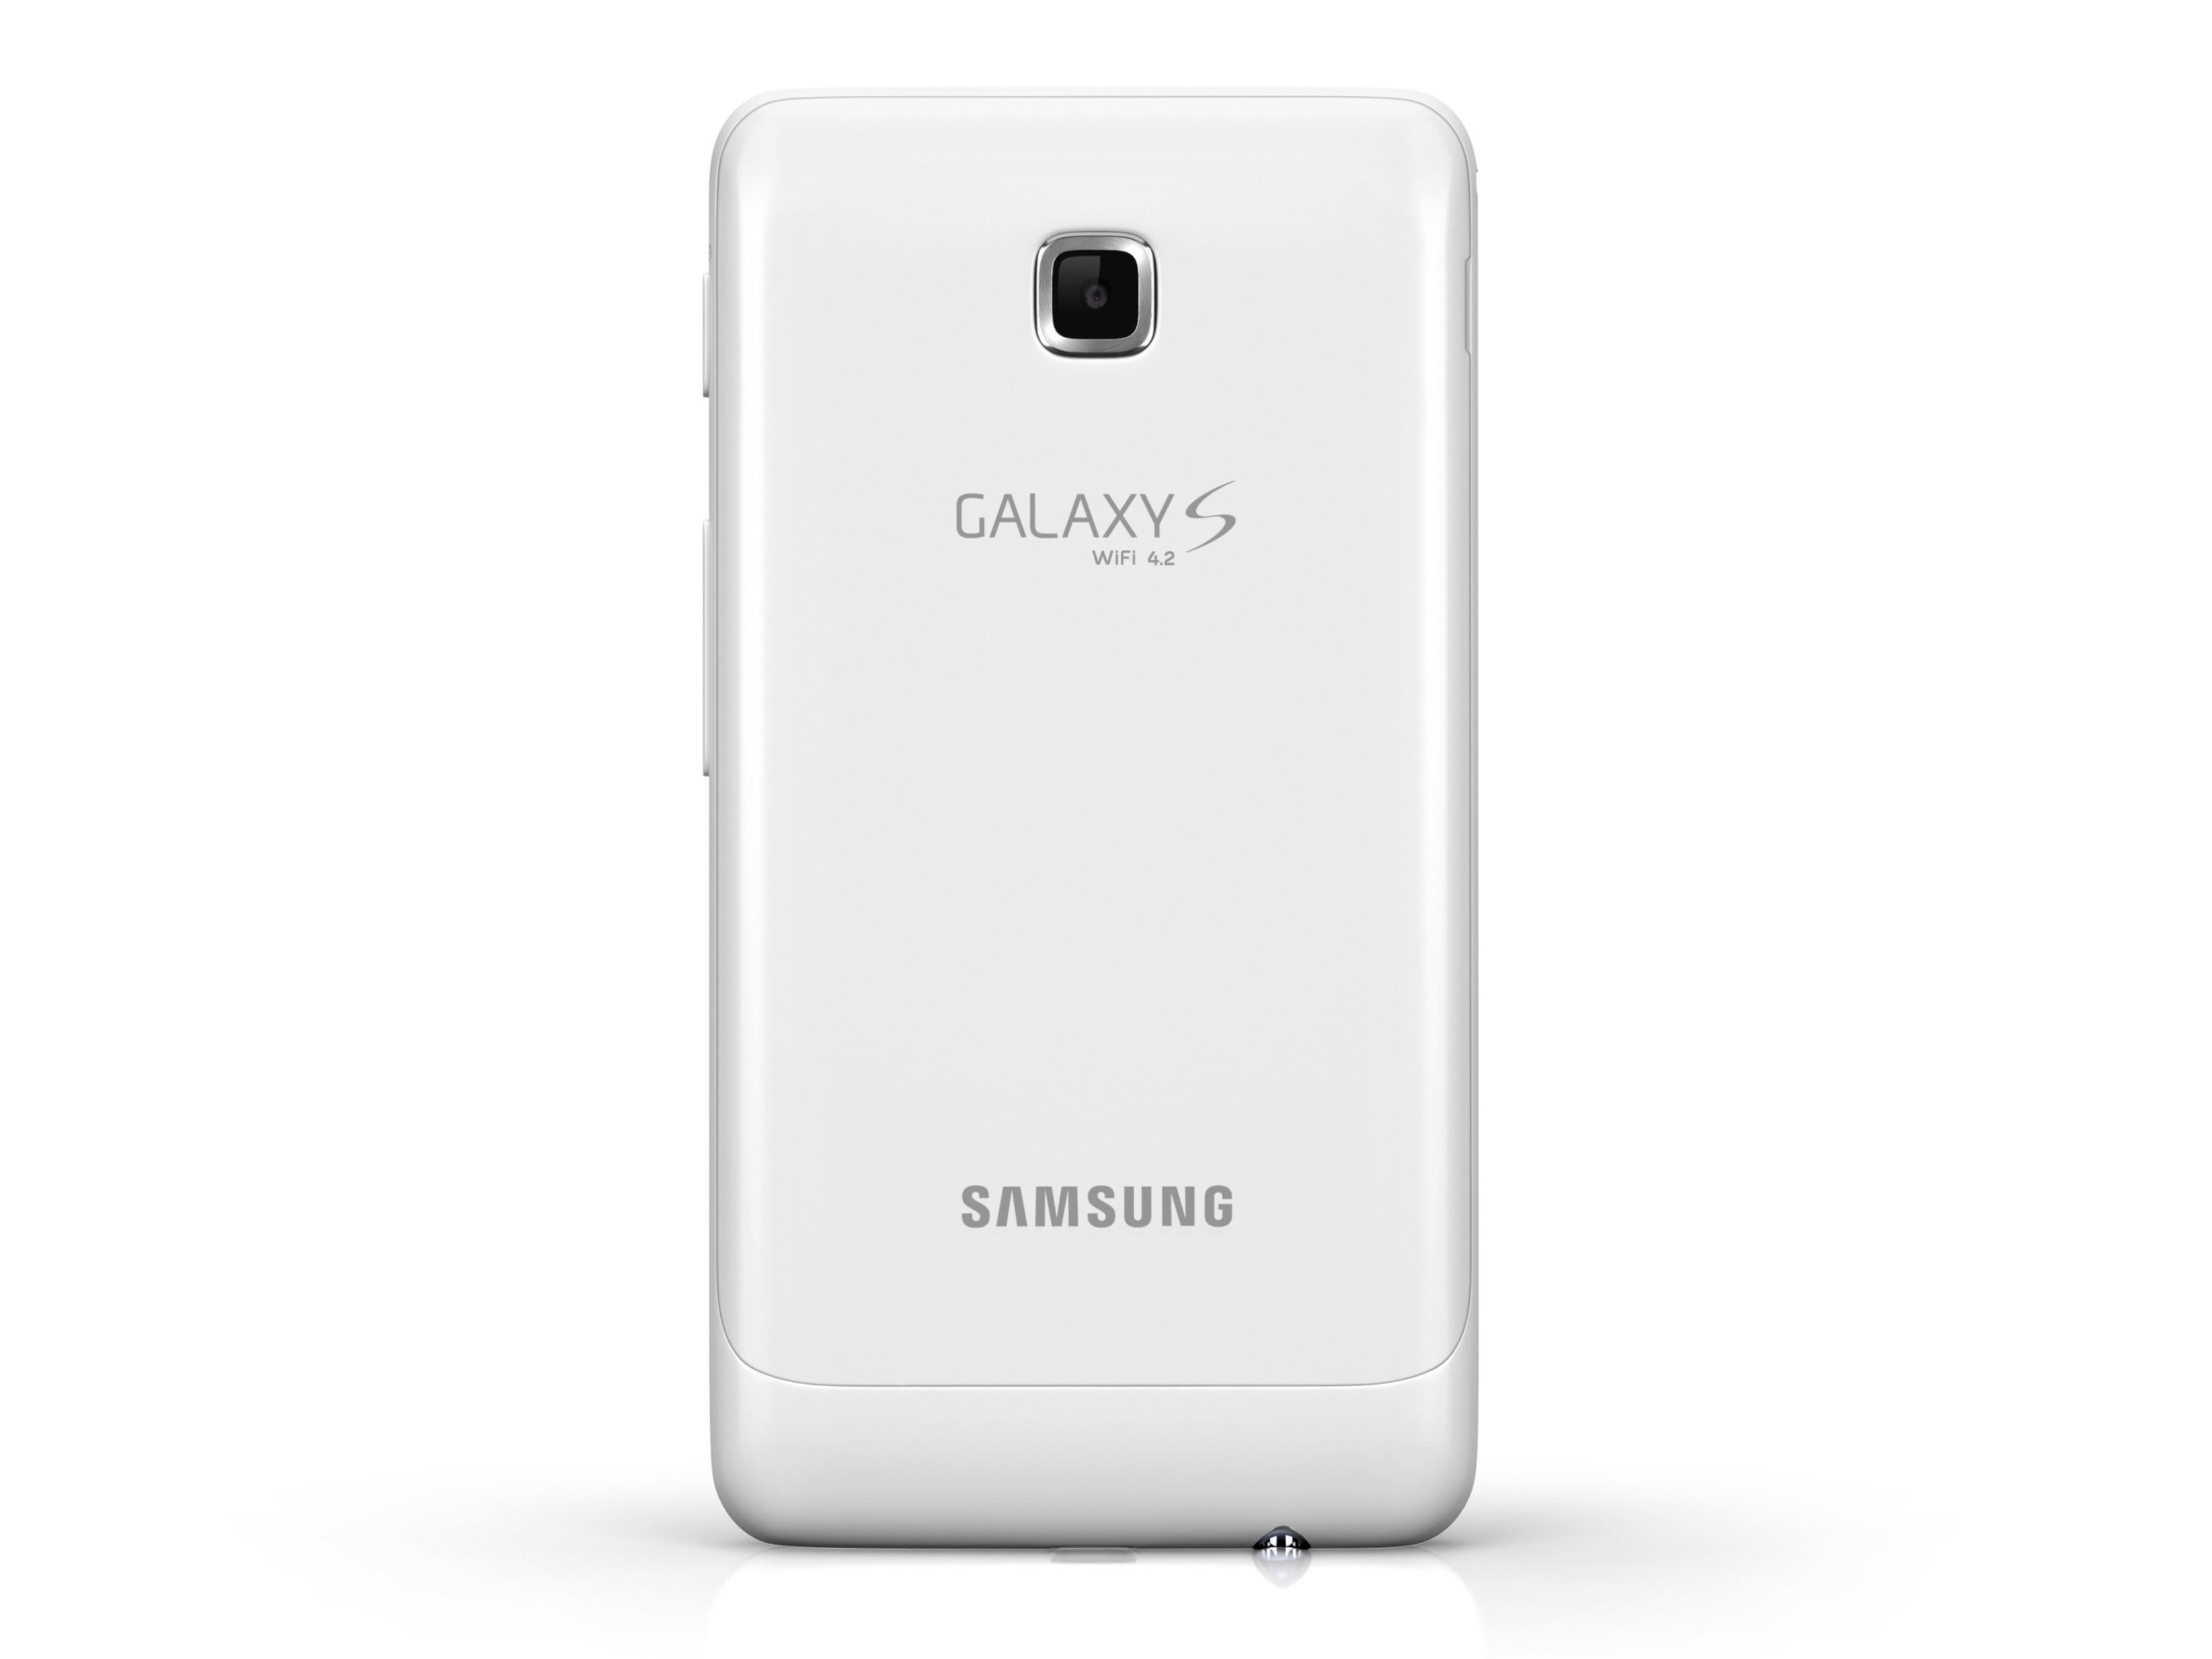 Samsung Galaxy S WiFi announced TechRadar